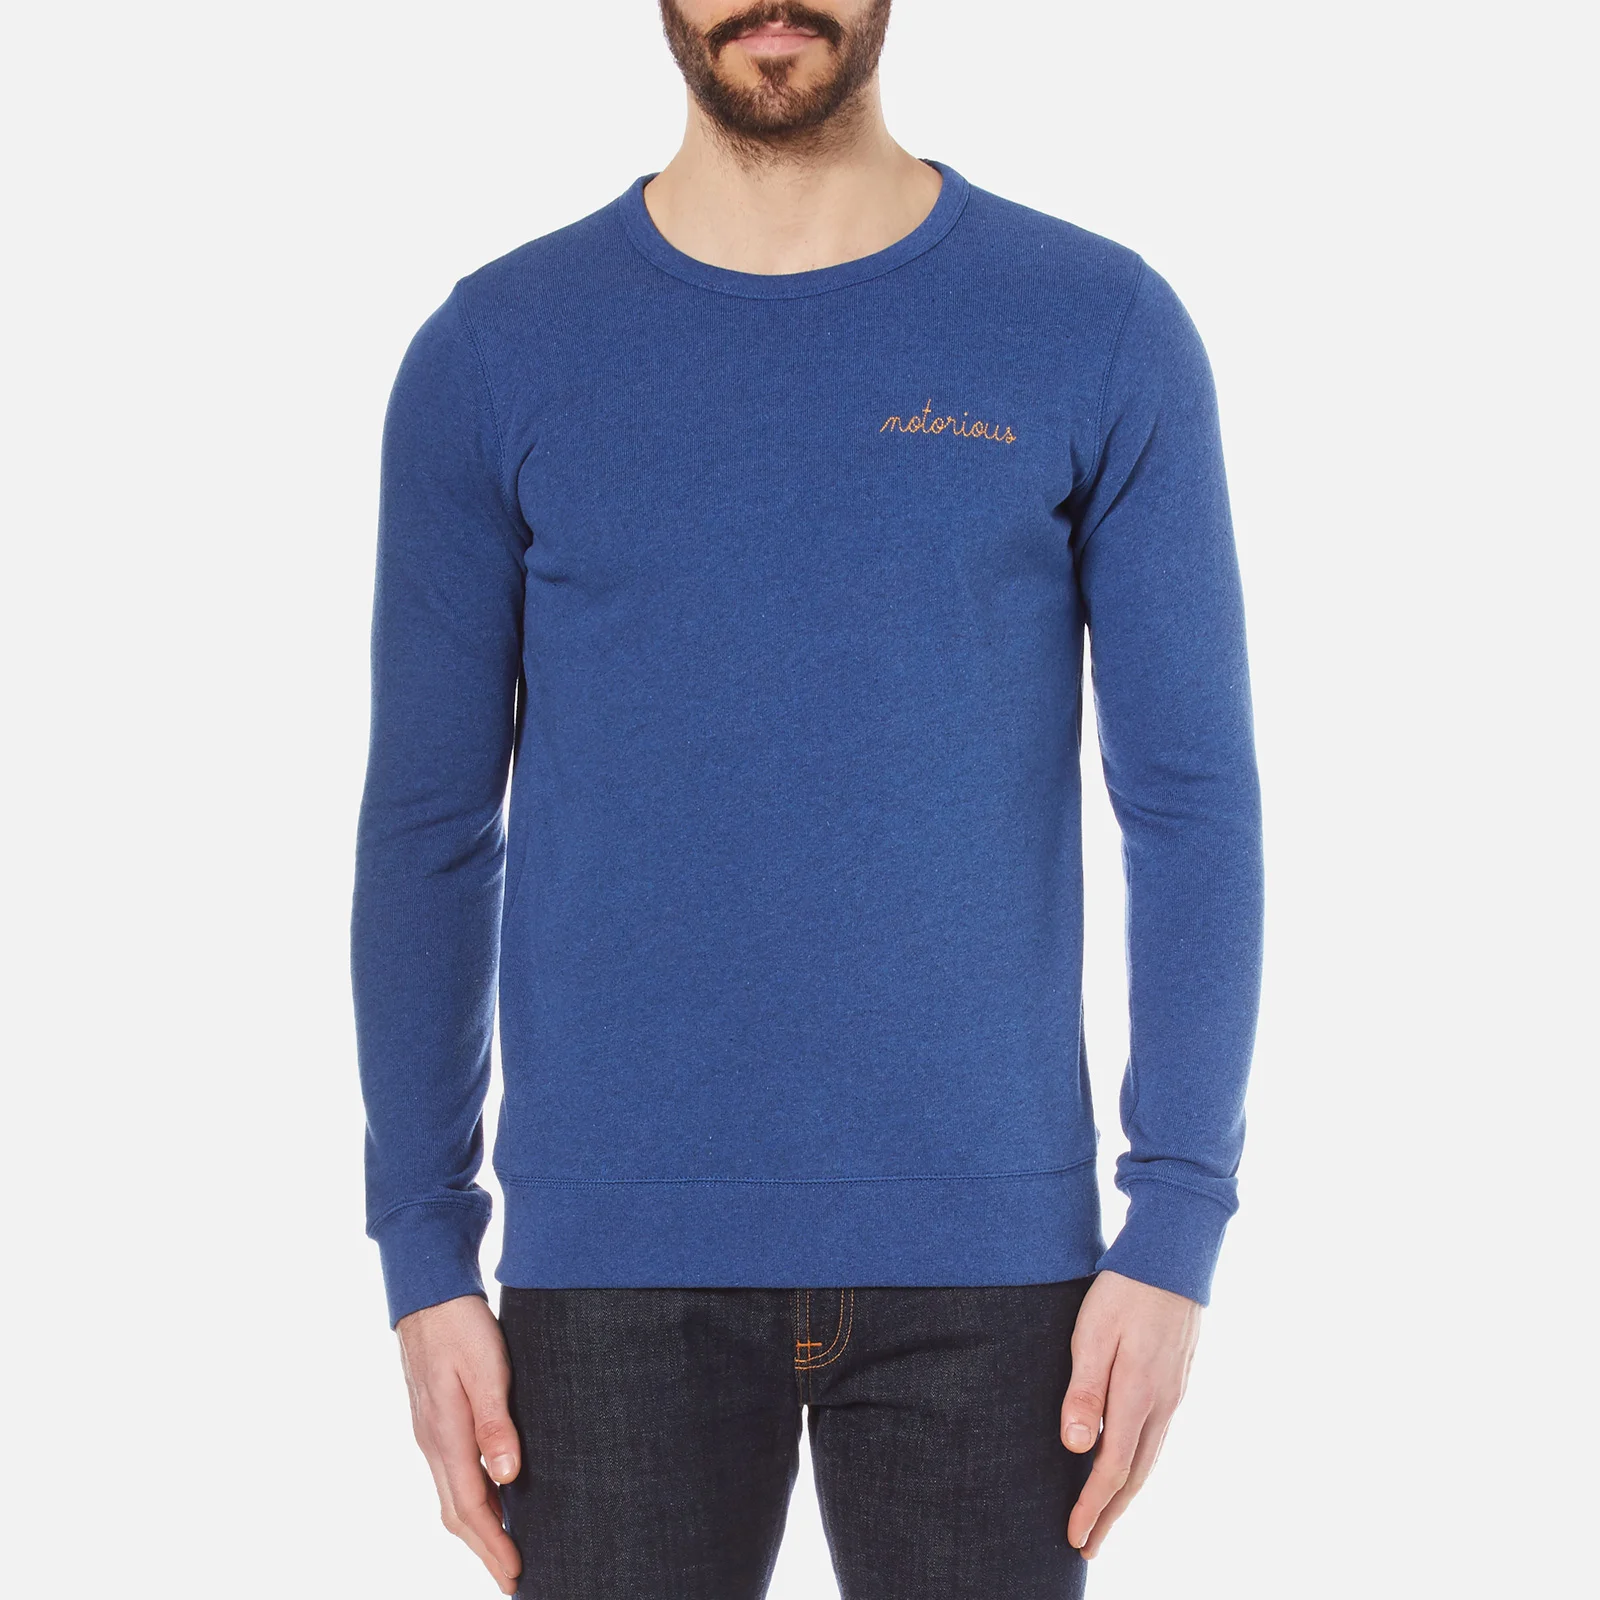 Maison Labiche Men's Notorious Sweatshirt - Ultra Marine Blue Image 1